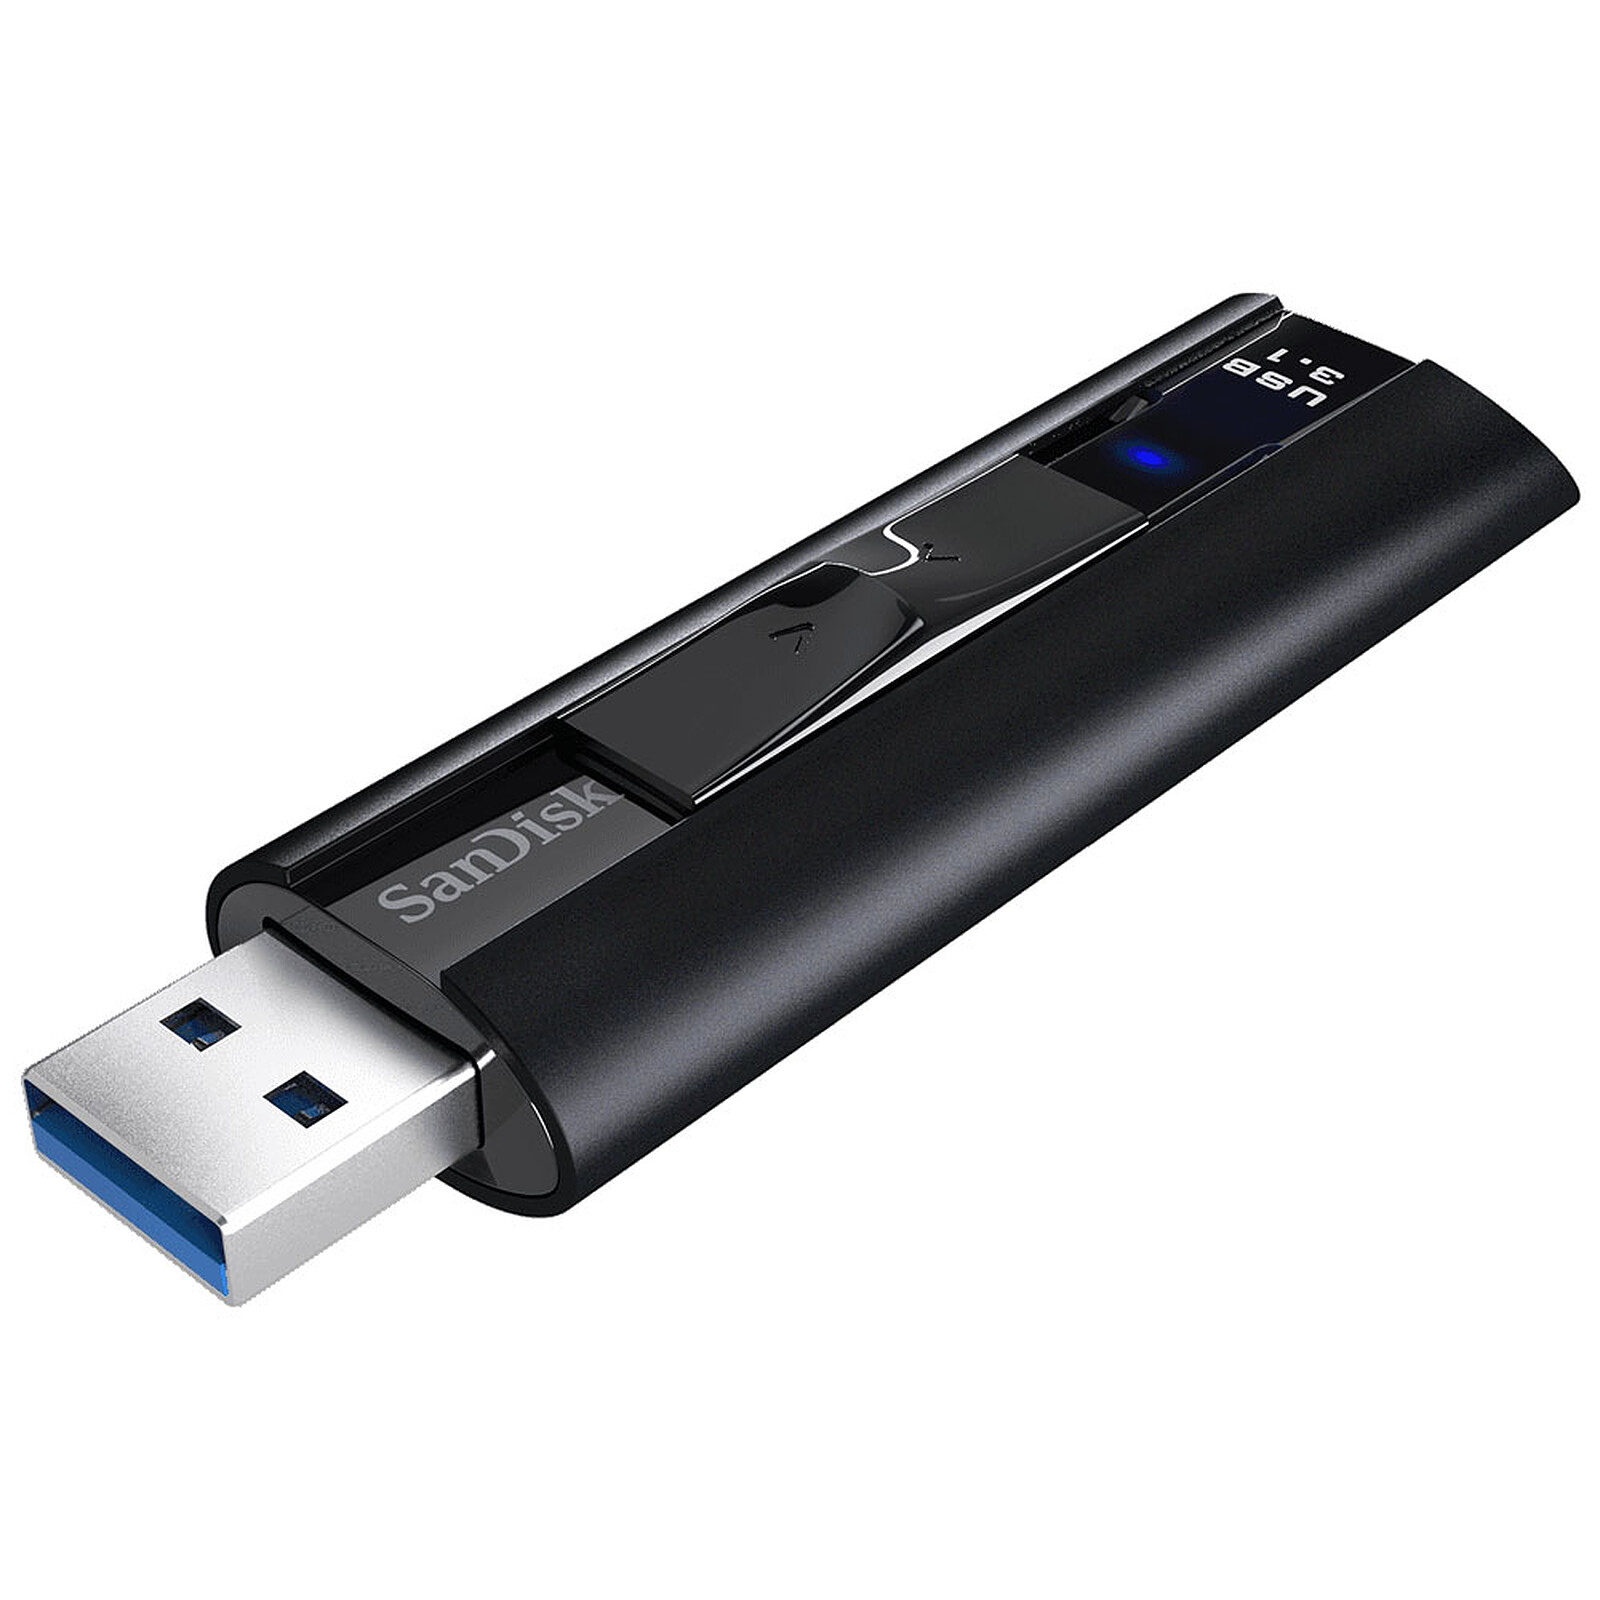 SanDisk Extreme PRO Flash SSD USB 3.1 - 128 Go - Clé USB